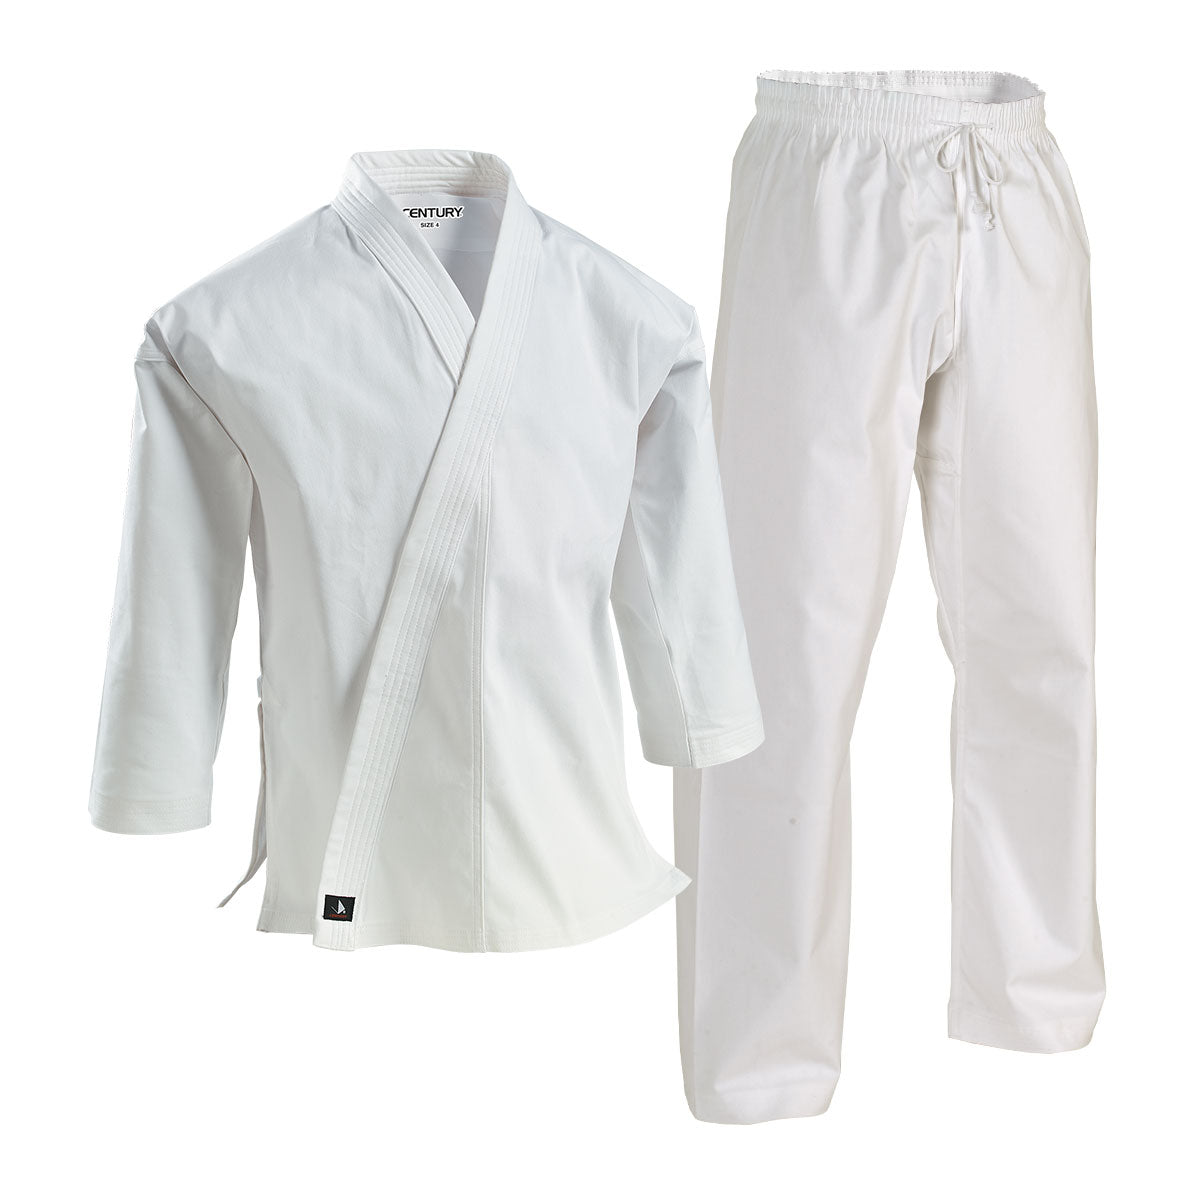 10 oz. Middleweight Brushed Cotton Uniform White